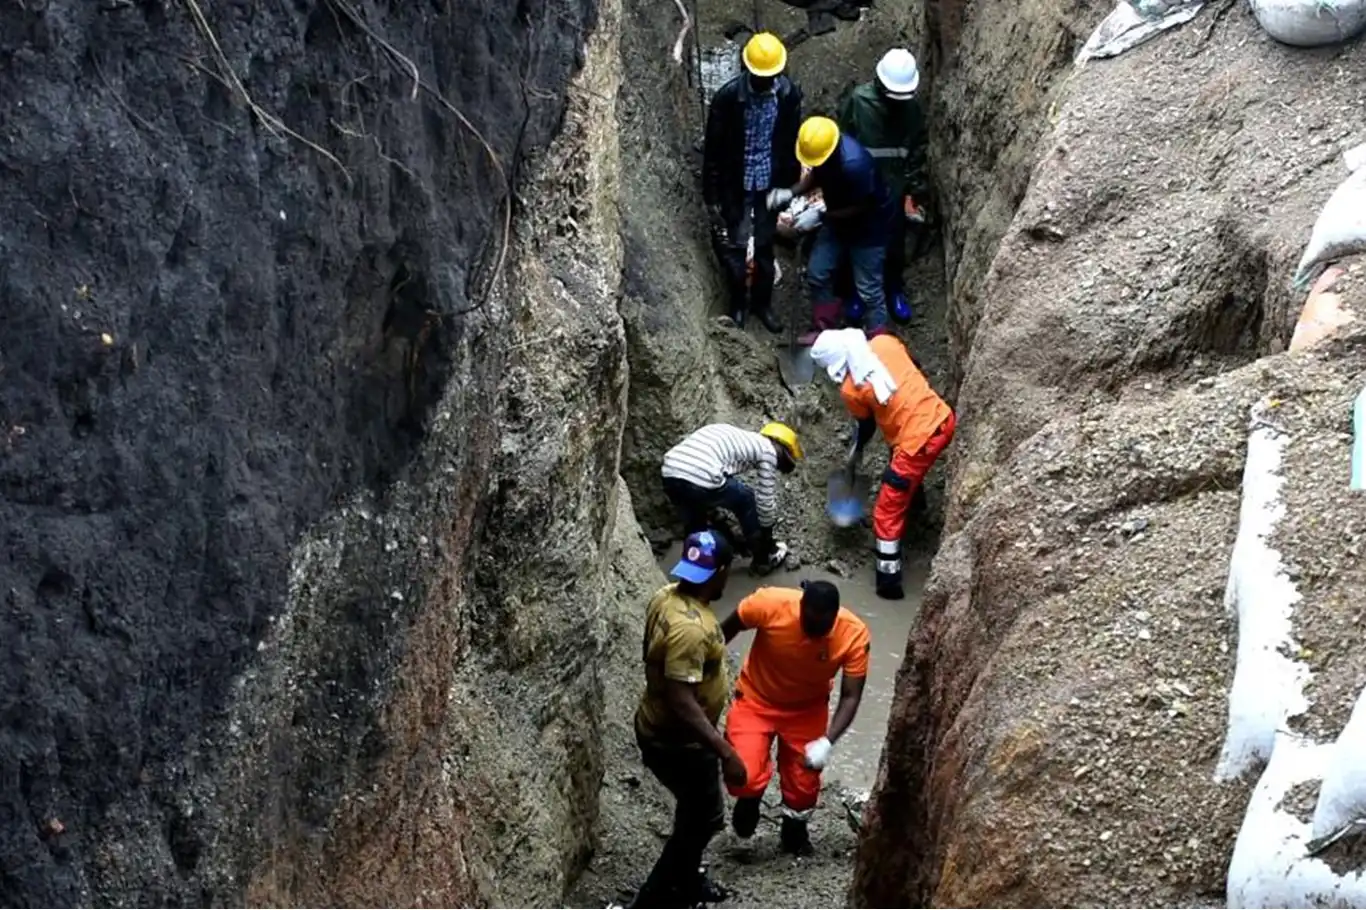 Tanzanya’da altın madeni çöktü: 5 ölü